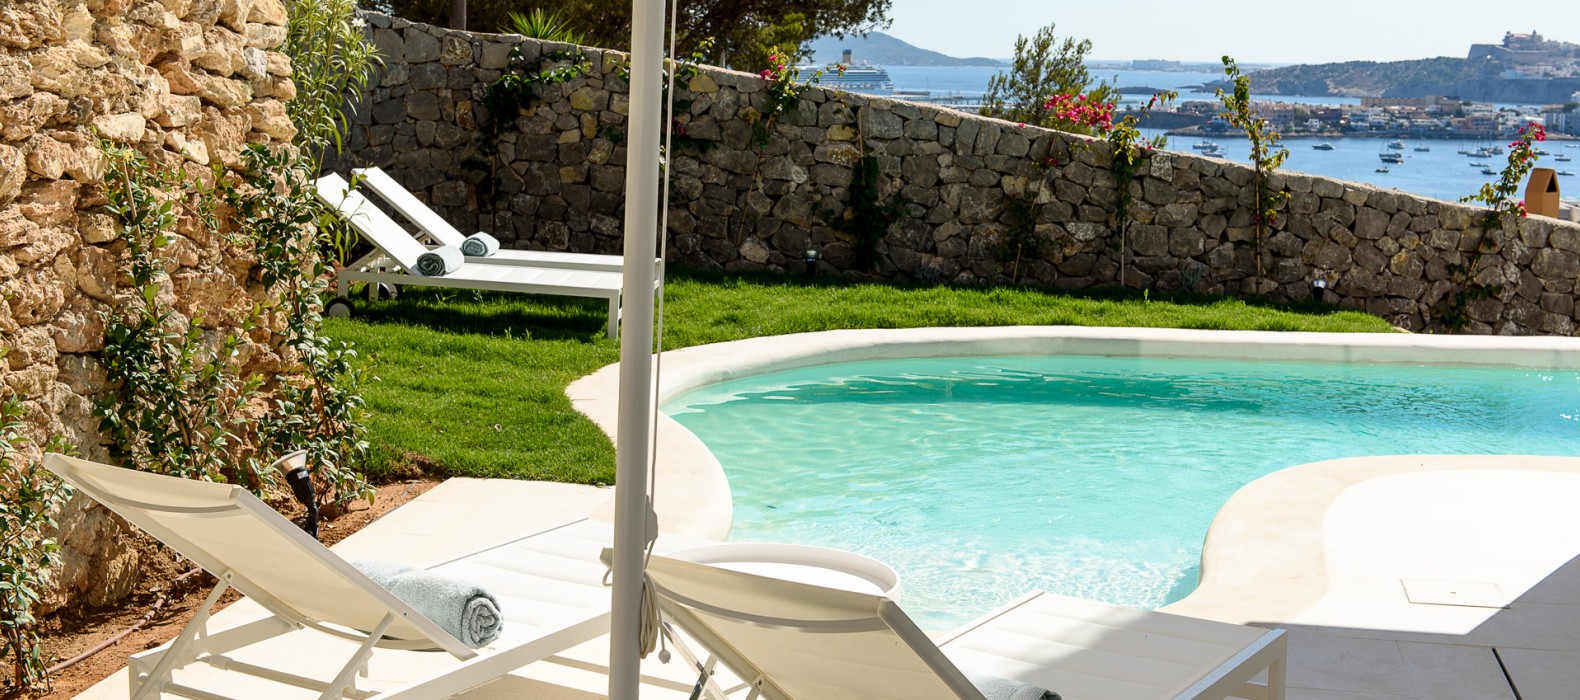 Pool view of Villa Triple X in Ibiza